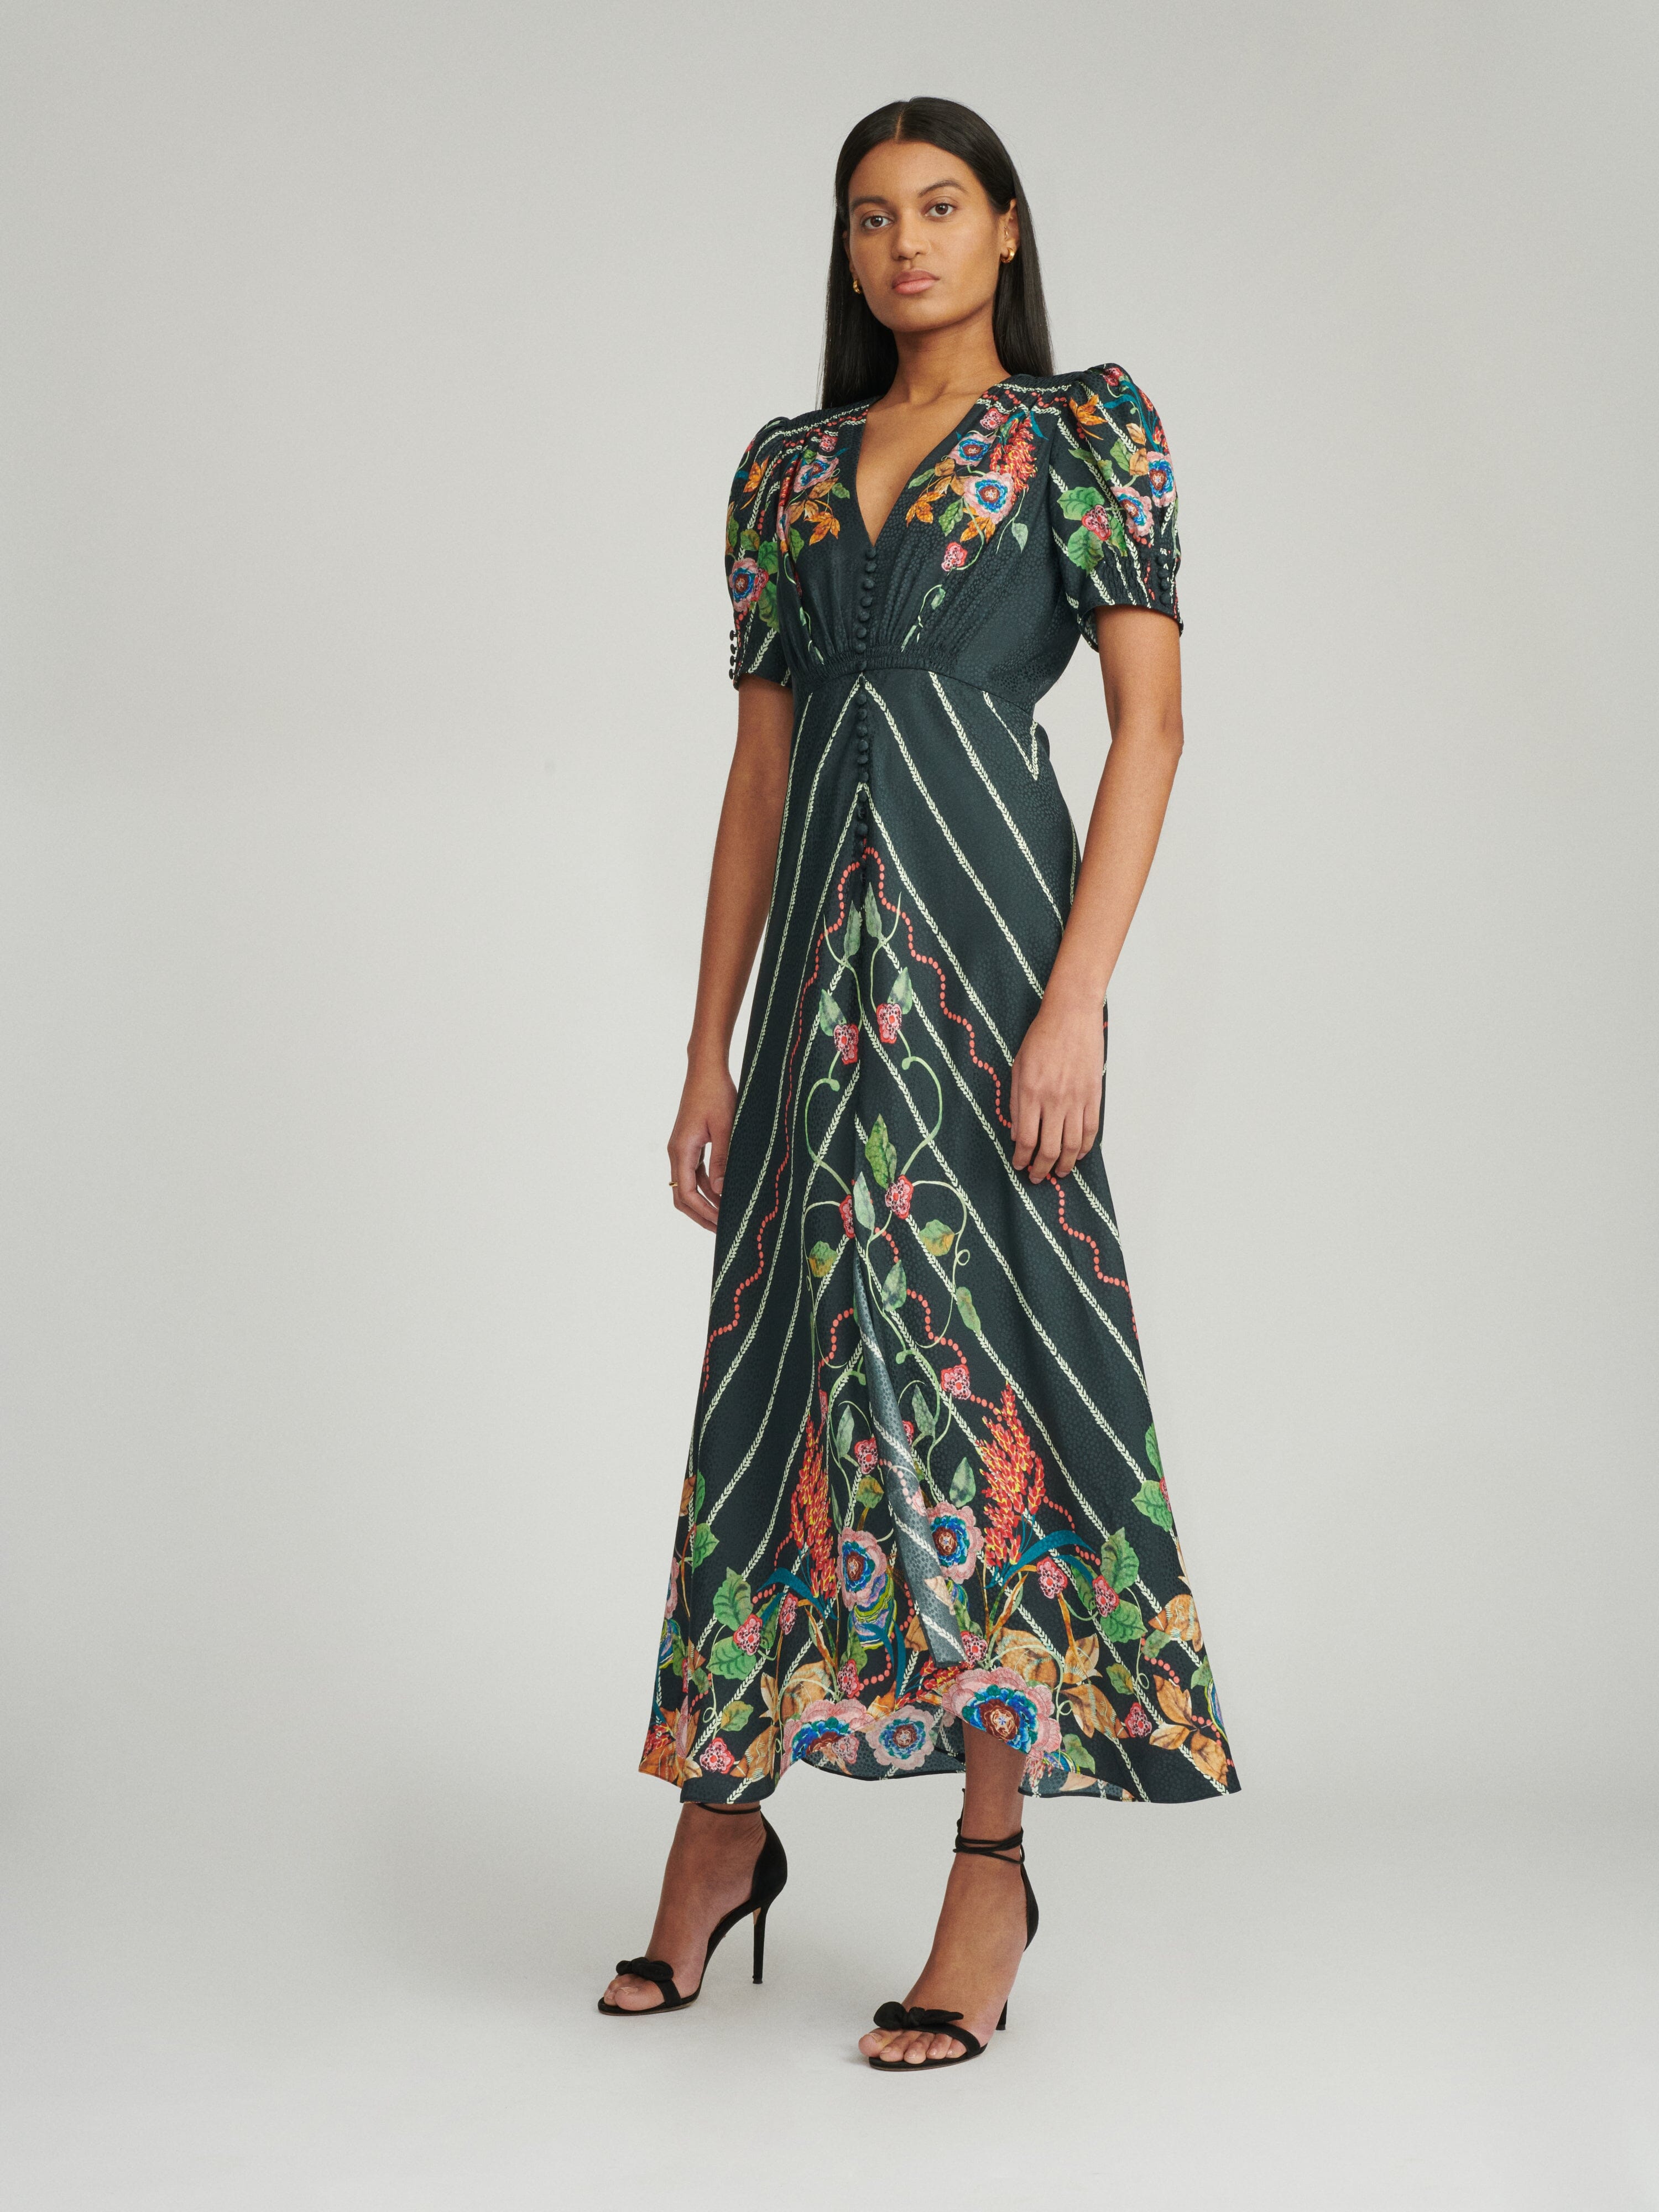 Lea Long Dress in Forest Rose print